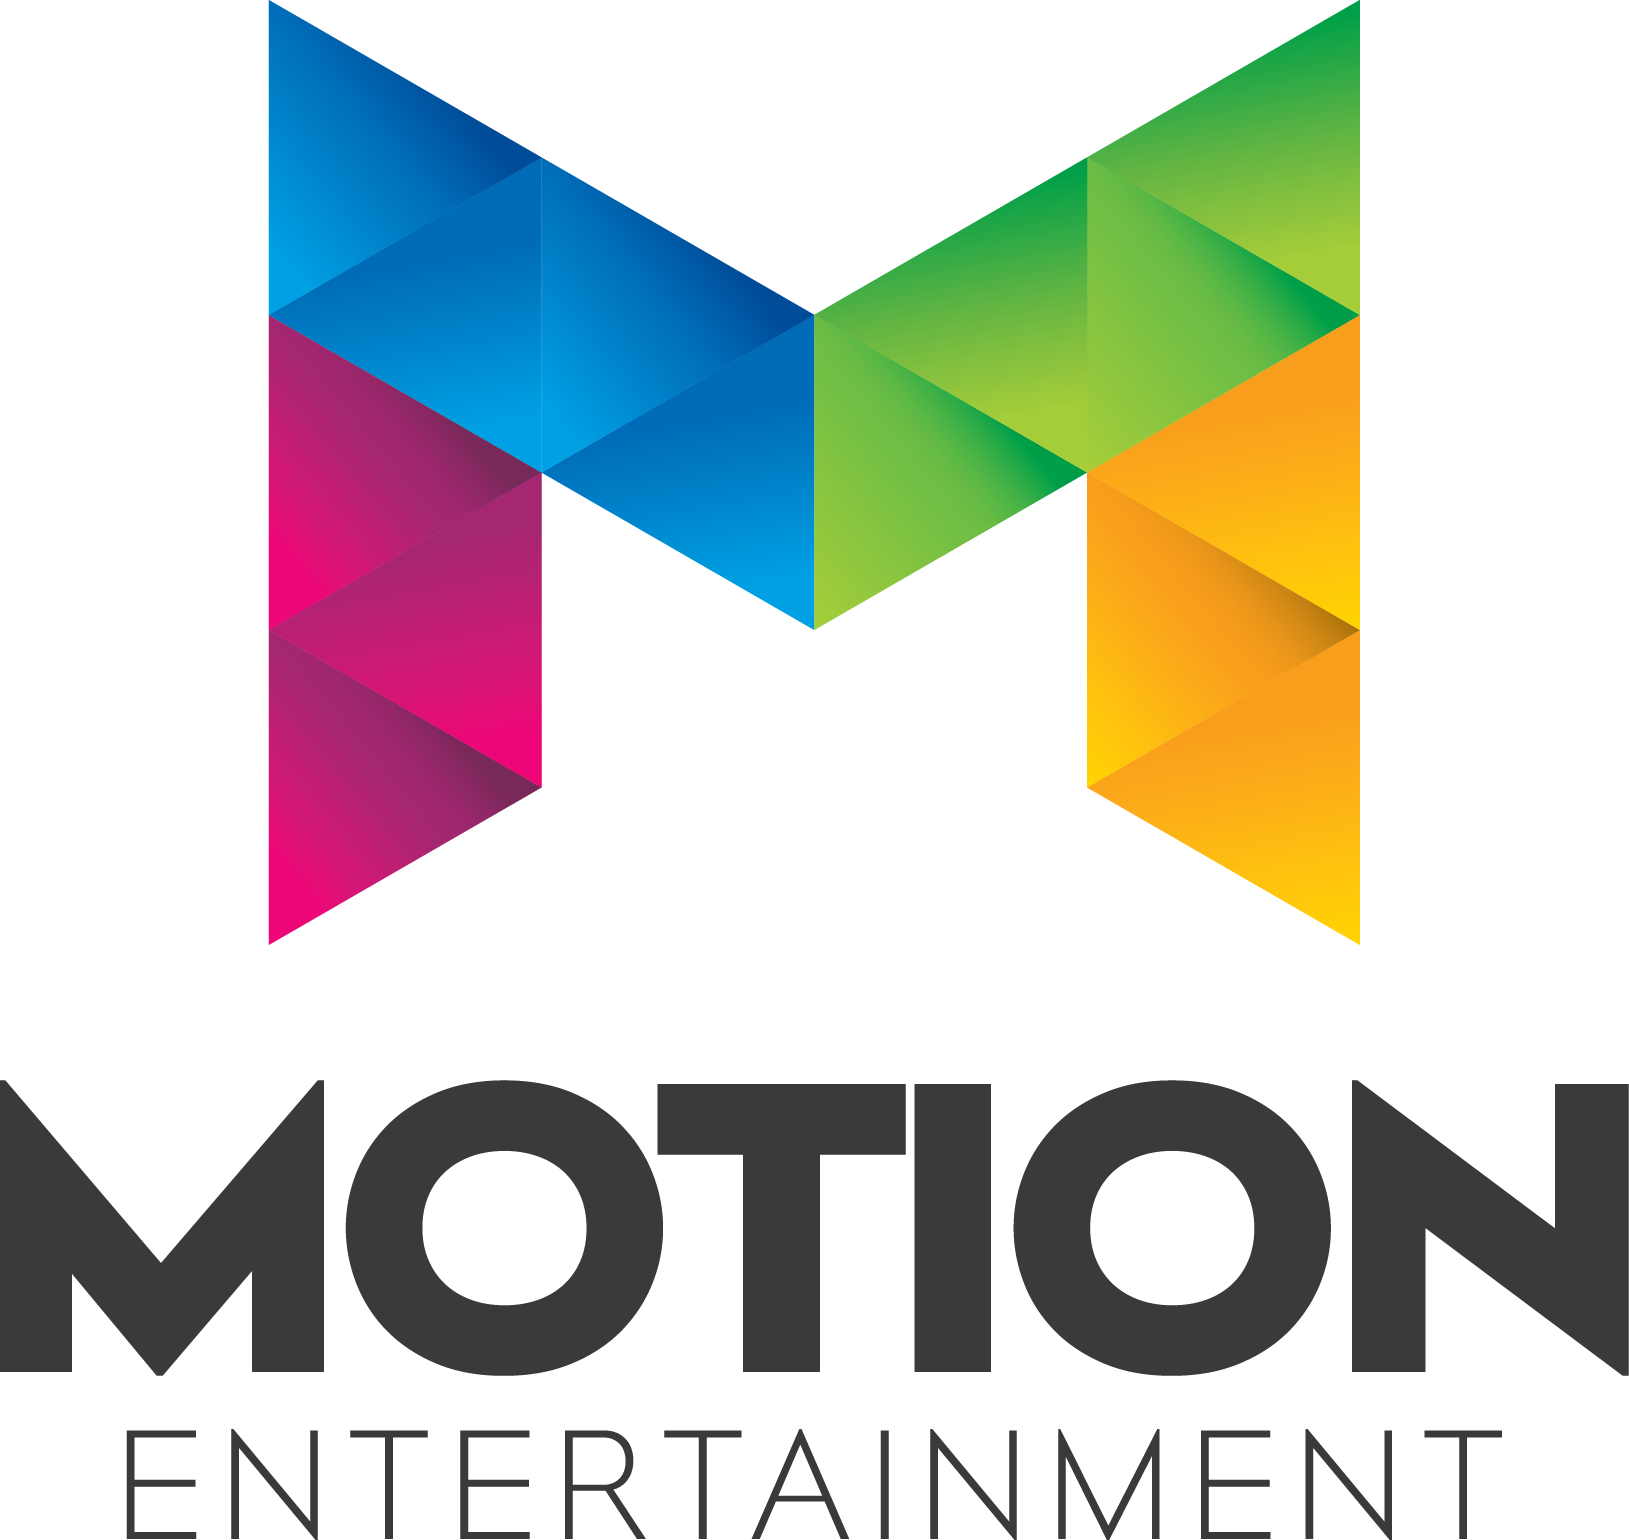 
Motion Entertainment